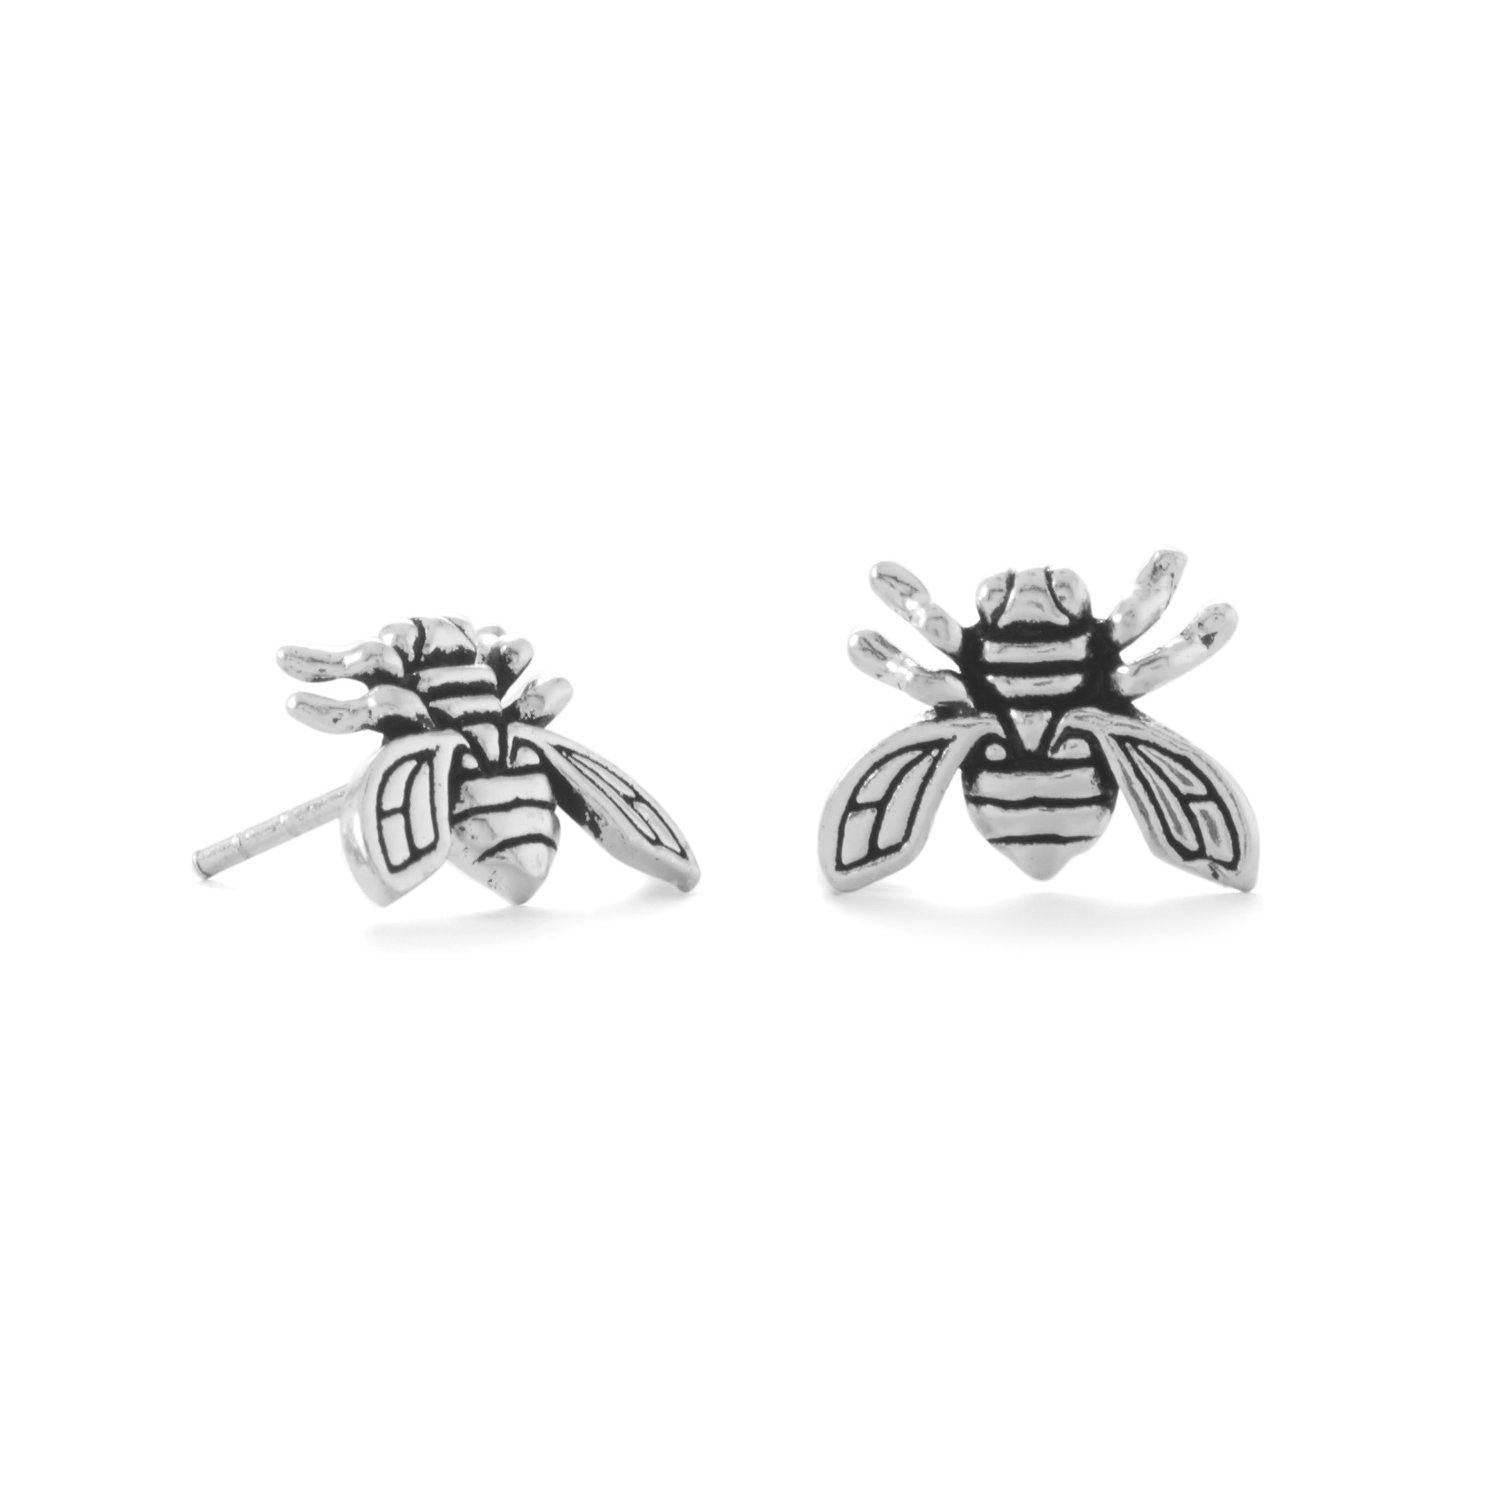 "Be the Buzz!" Oxidized Buzzing Bee Stud Earrings freeshipping - Higher Class Elegance